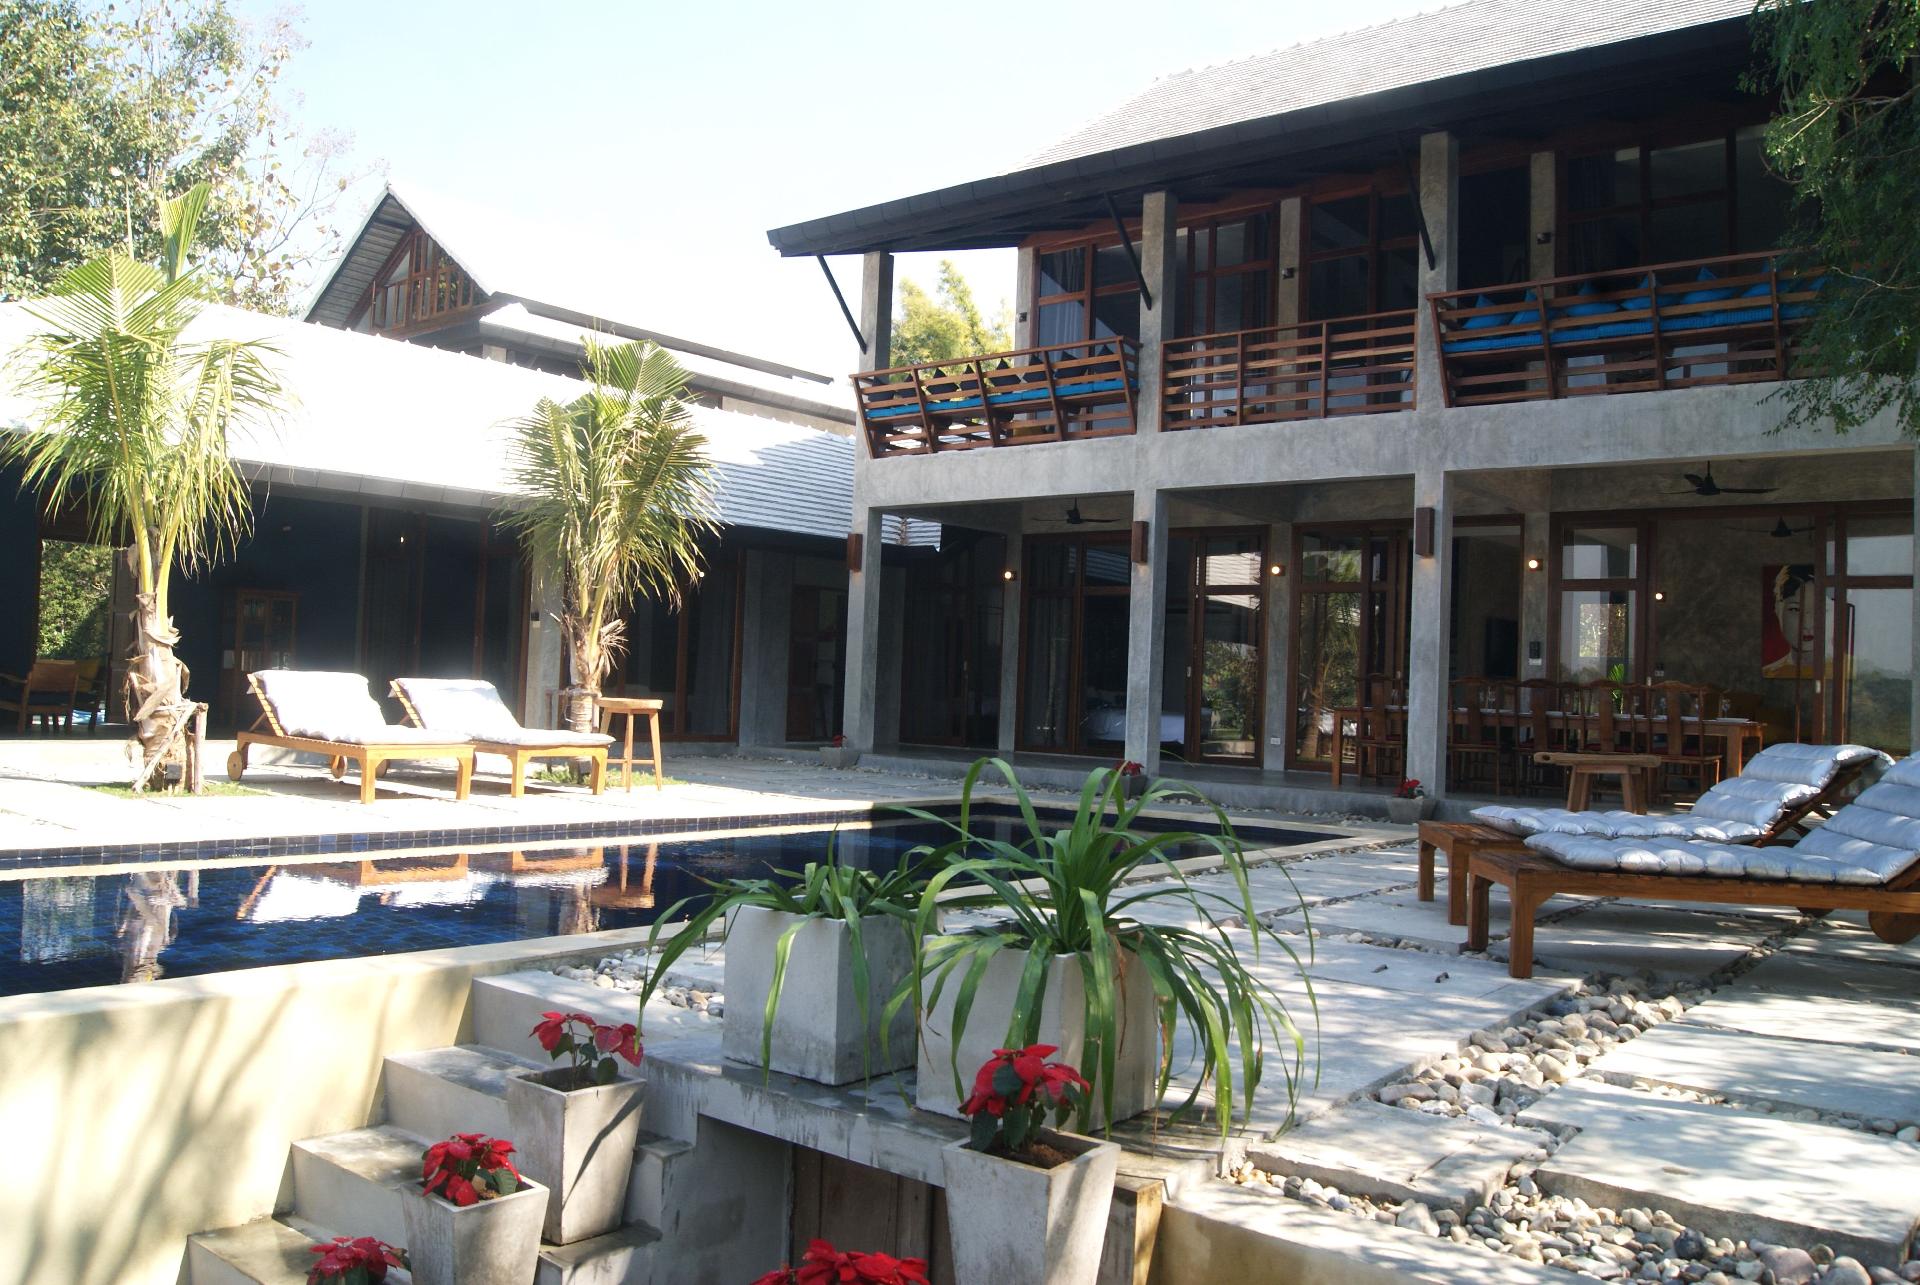 2 Ping Pool Villas - 2 atemberaubend gestaltete Vi Ferienhaus in Thailand